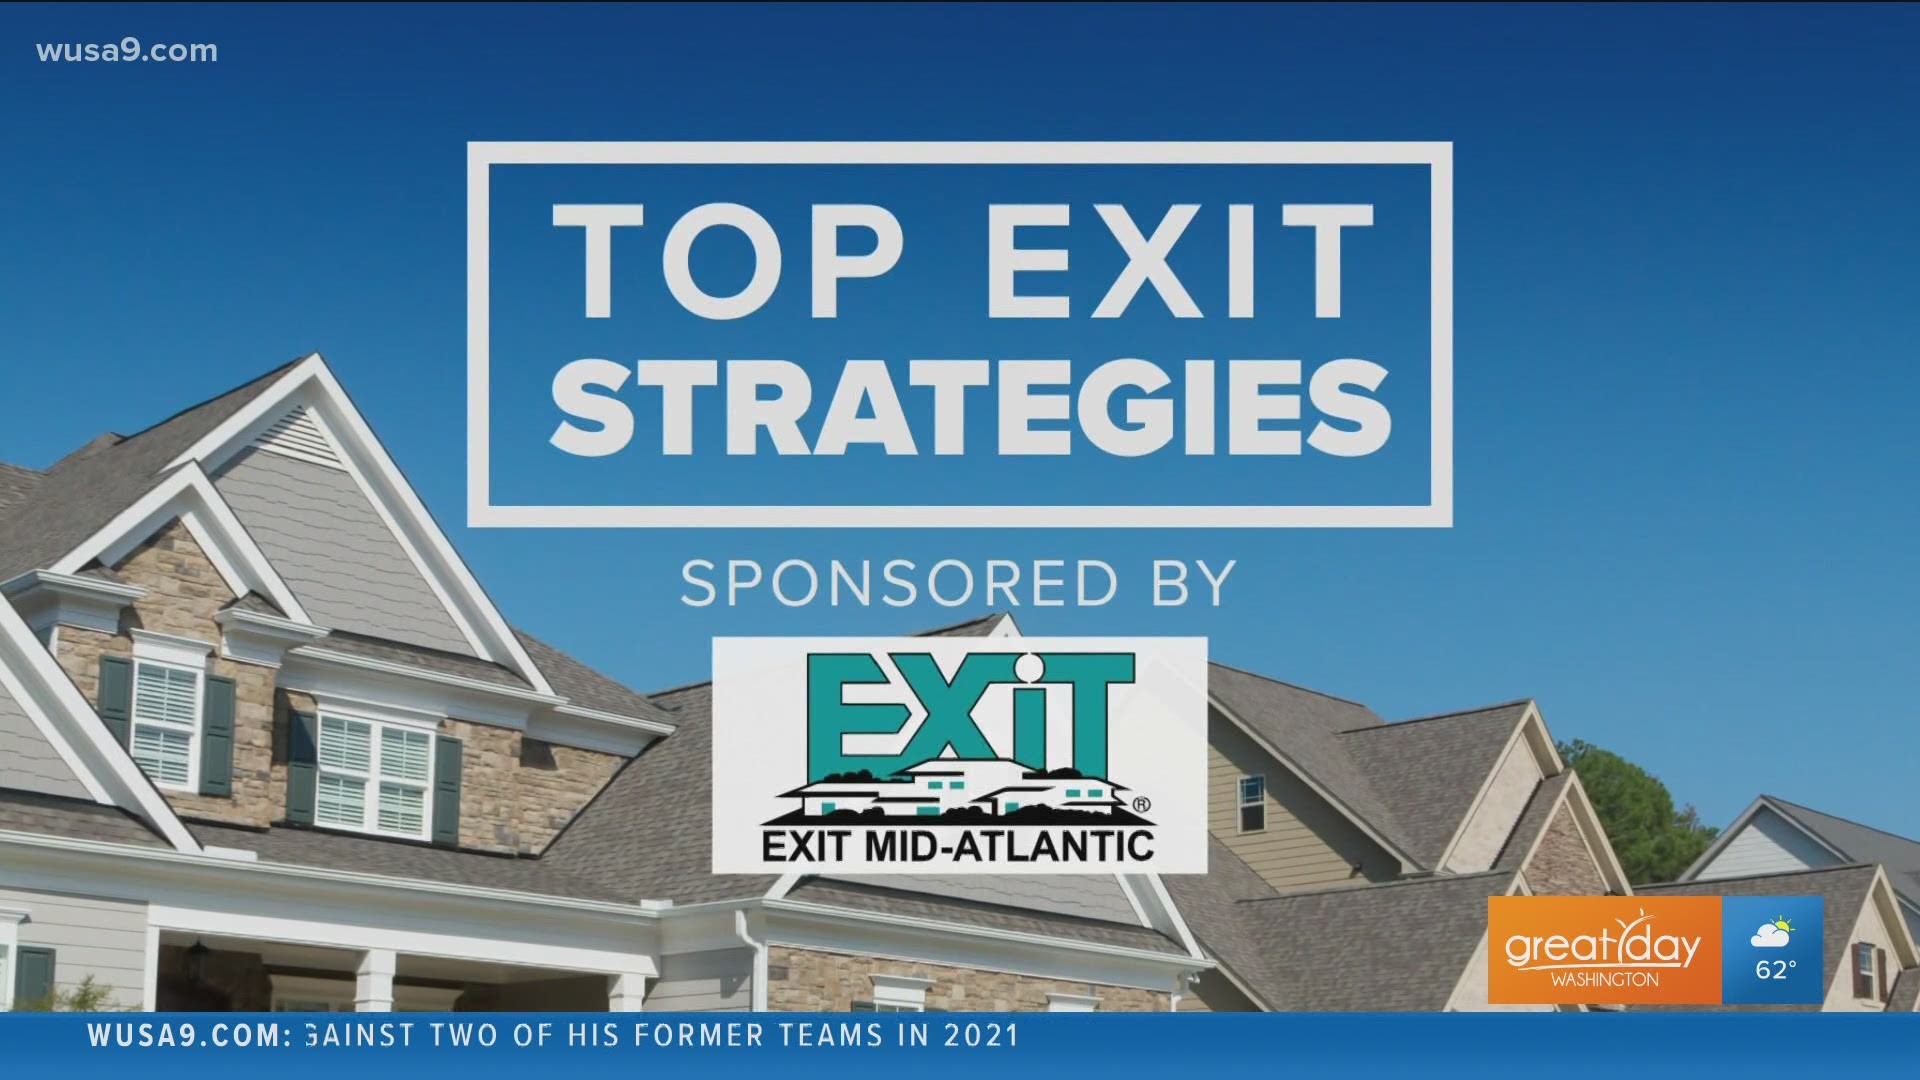 Sponsored by Exit Mid-Atlantic. Visit ExitMidAtlantic.com to start investing.